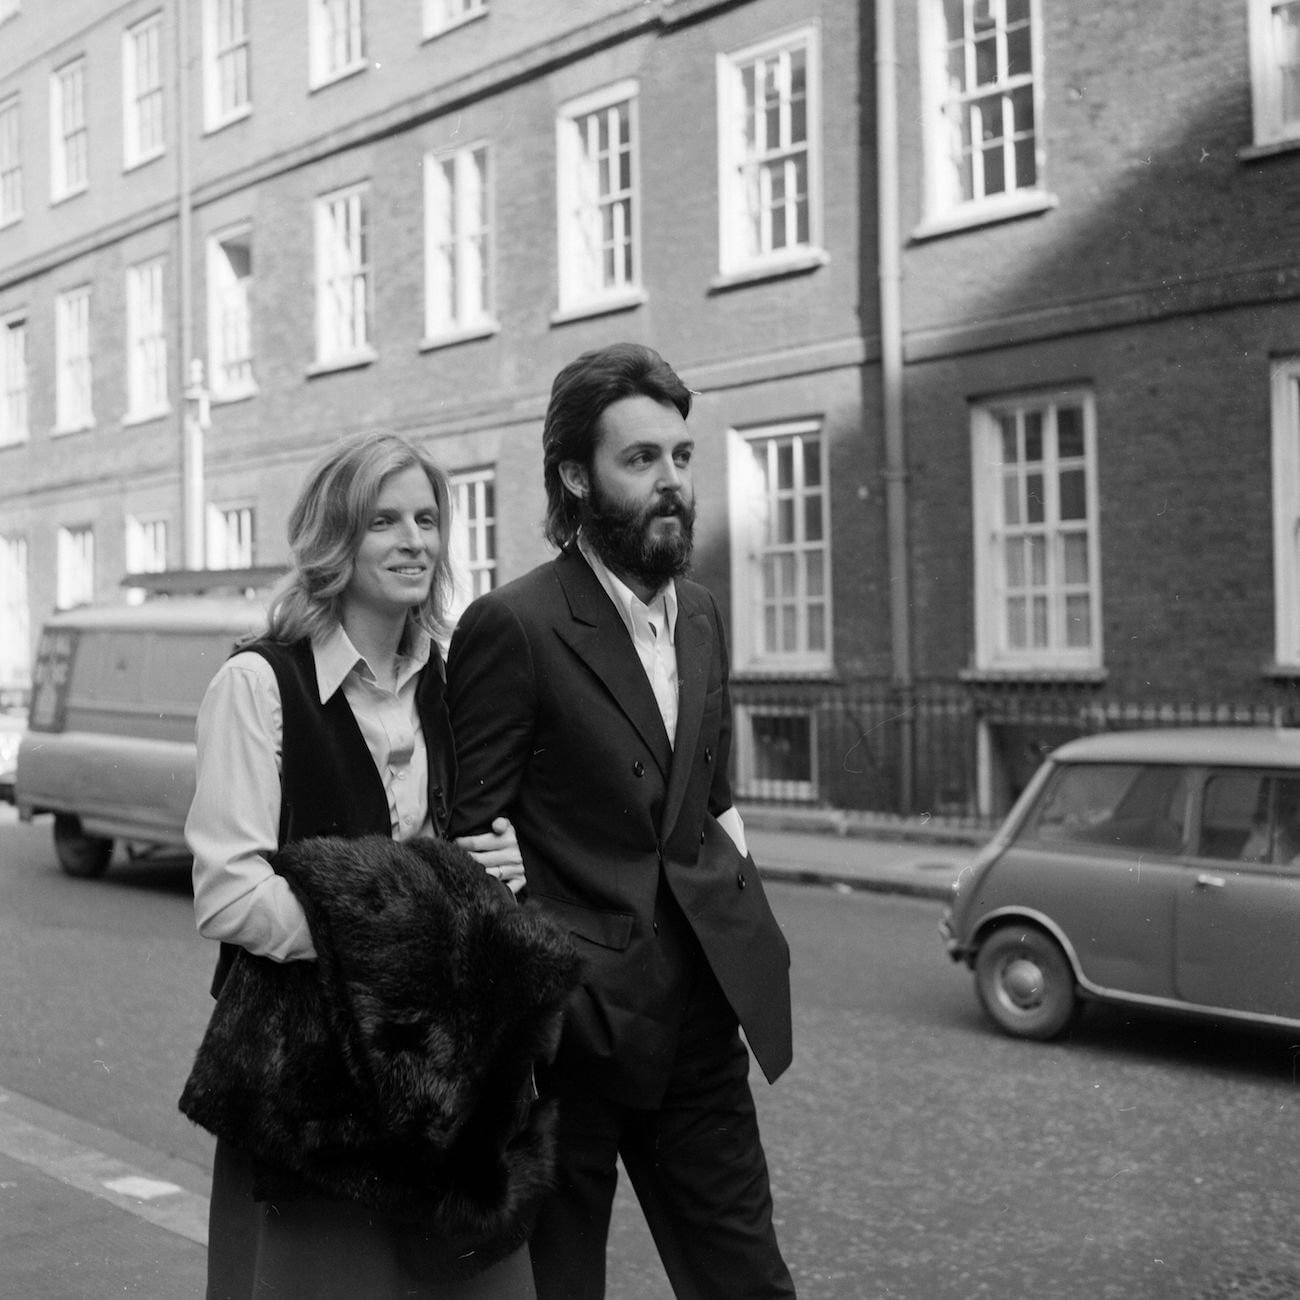 Paul McCartney and his wife Linda walking in London in 1971.